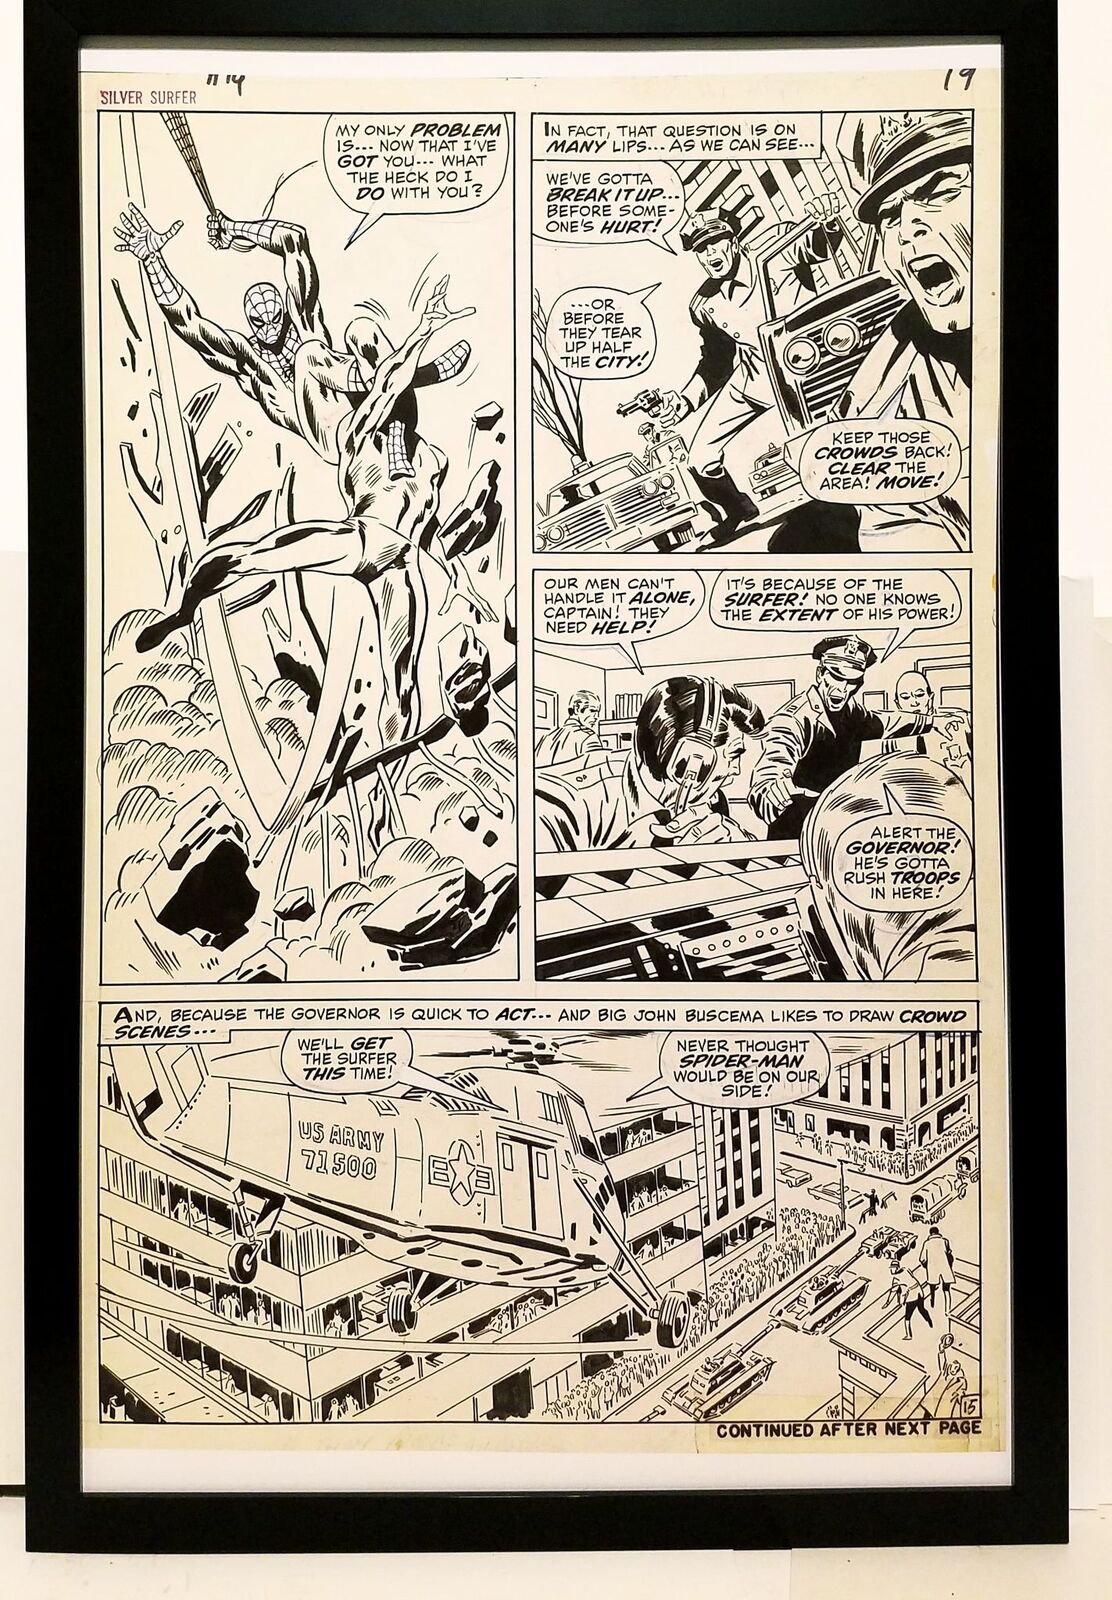 Silver Surfer #14 pg. 15 by John Buscema 11x17 FRAMED Original Art Print Marvel 